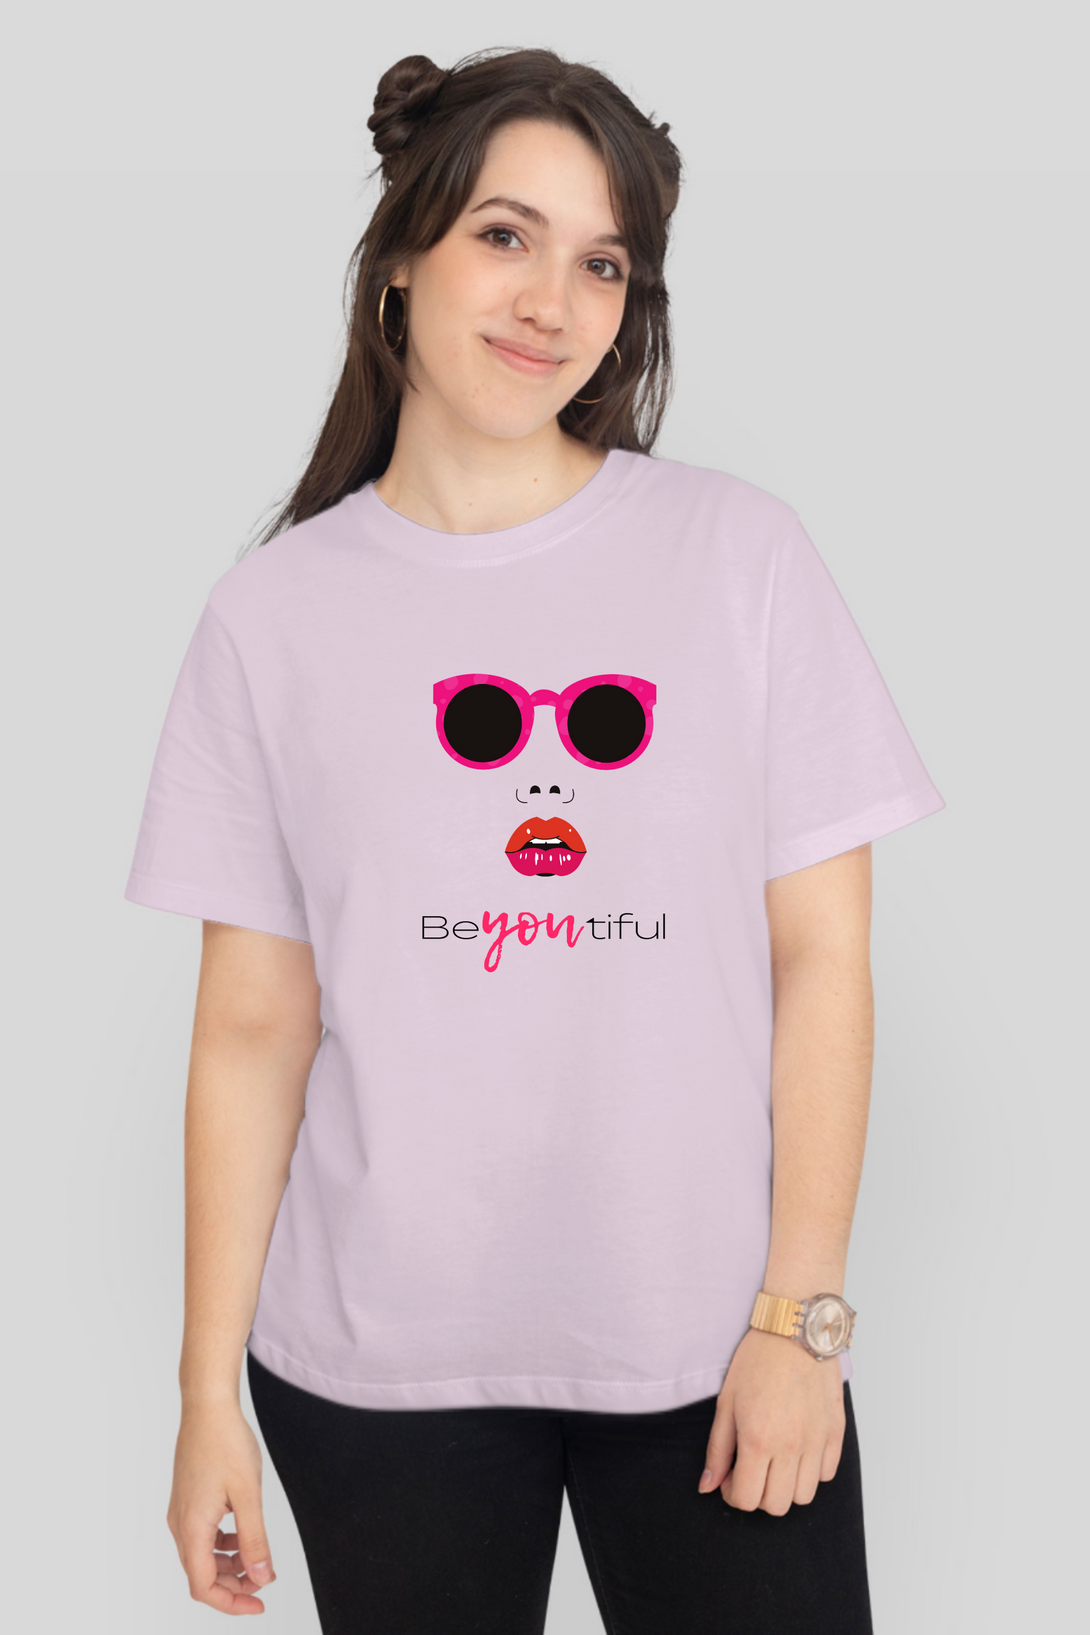 Beyoutiful Printed T-Shirt For Women - WowWaves - 7